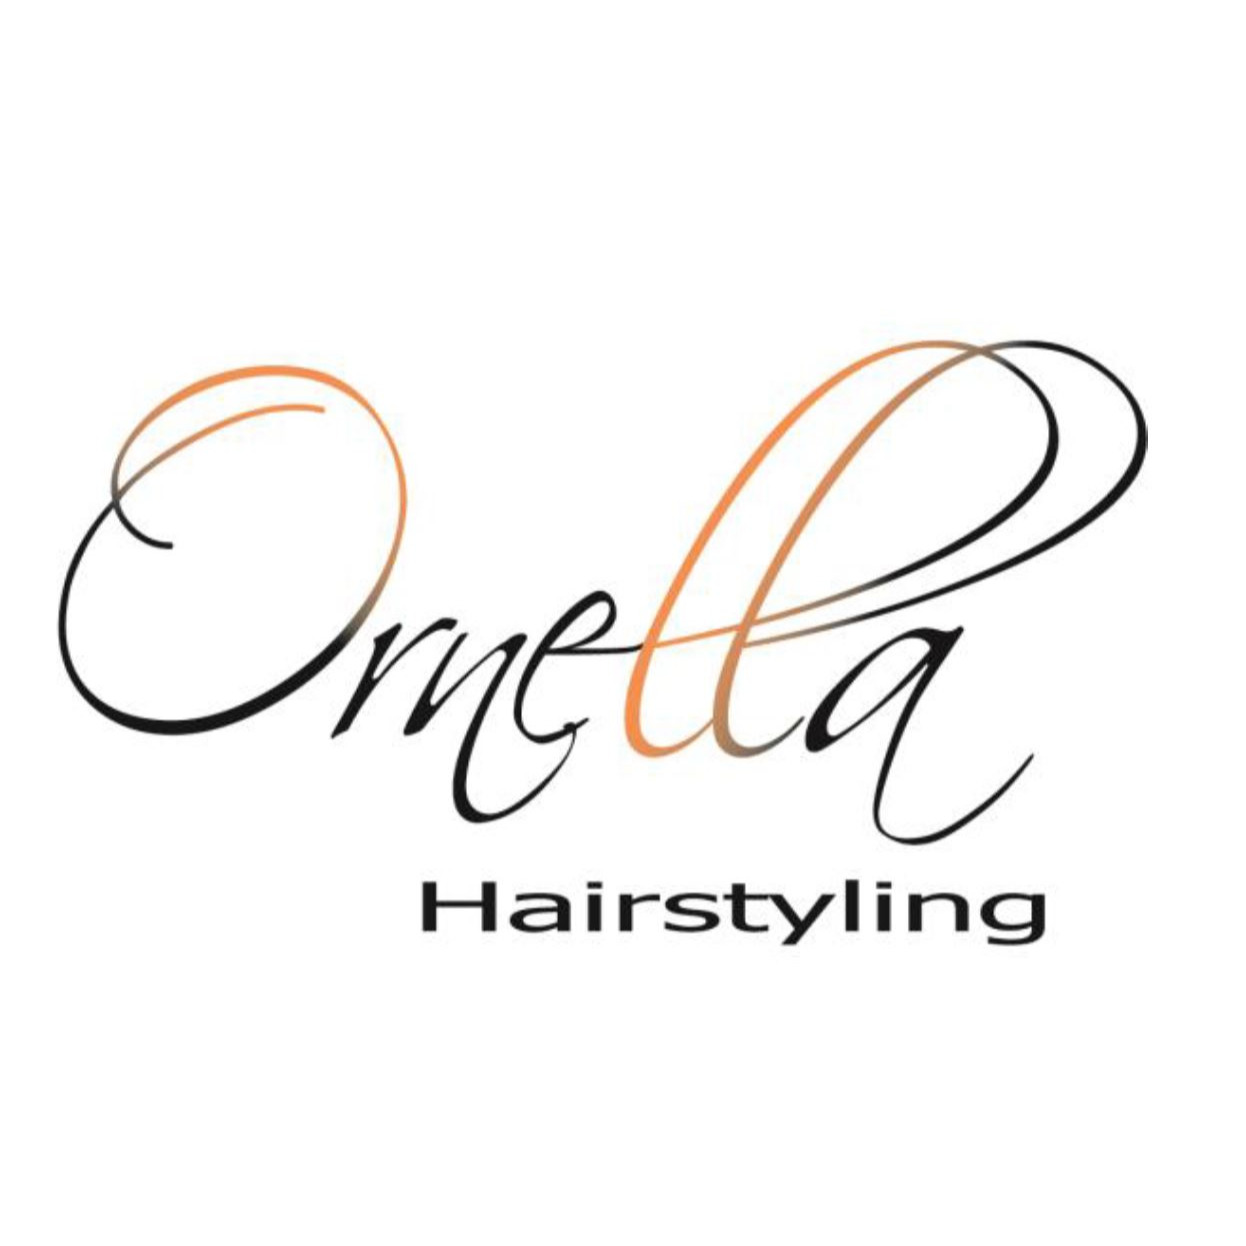 Ornella Hairstyling